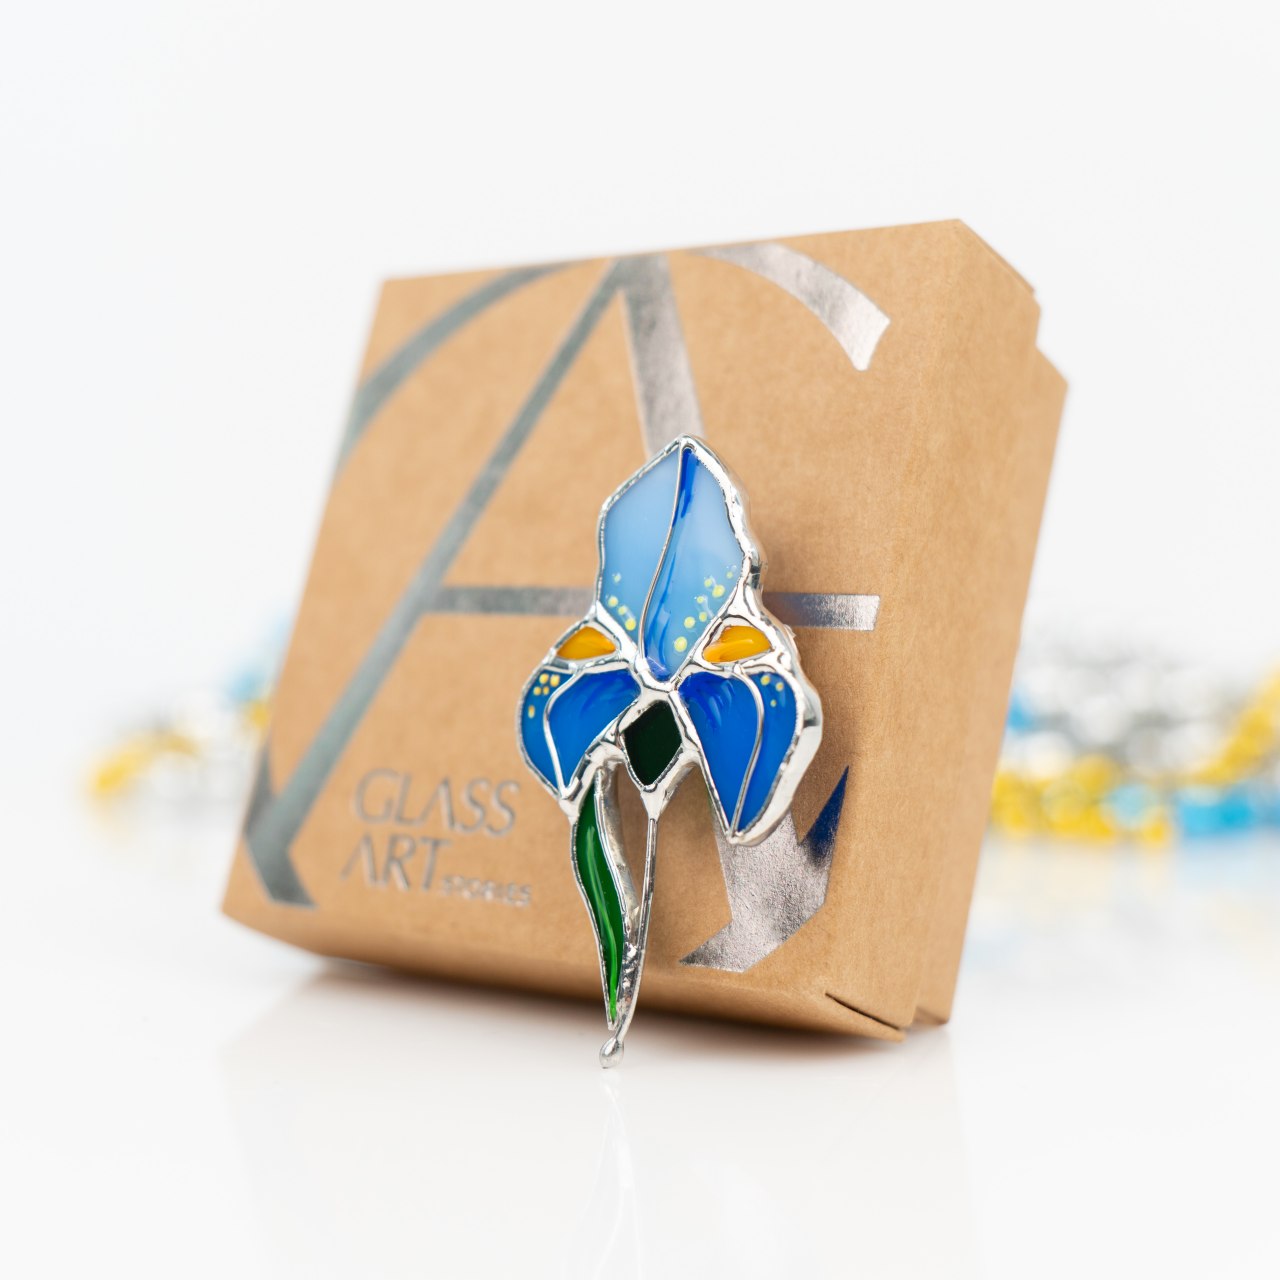  Stained glass bluish iris brooch 